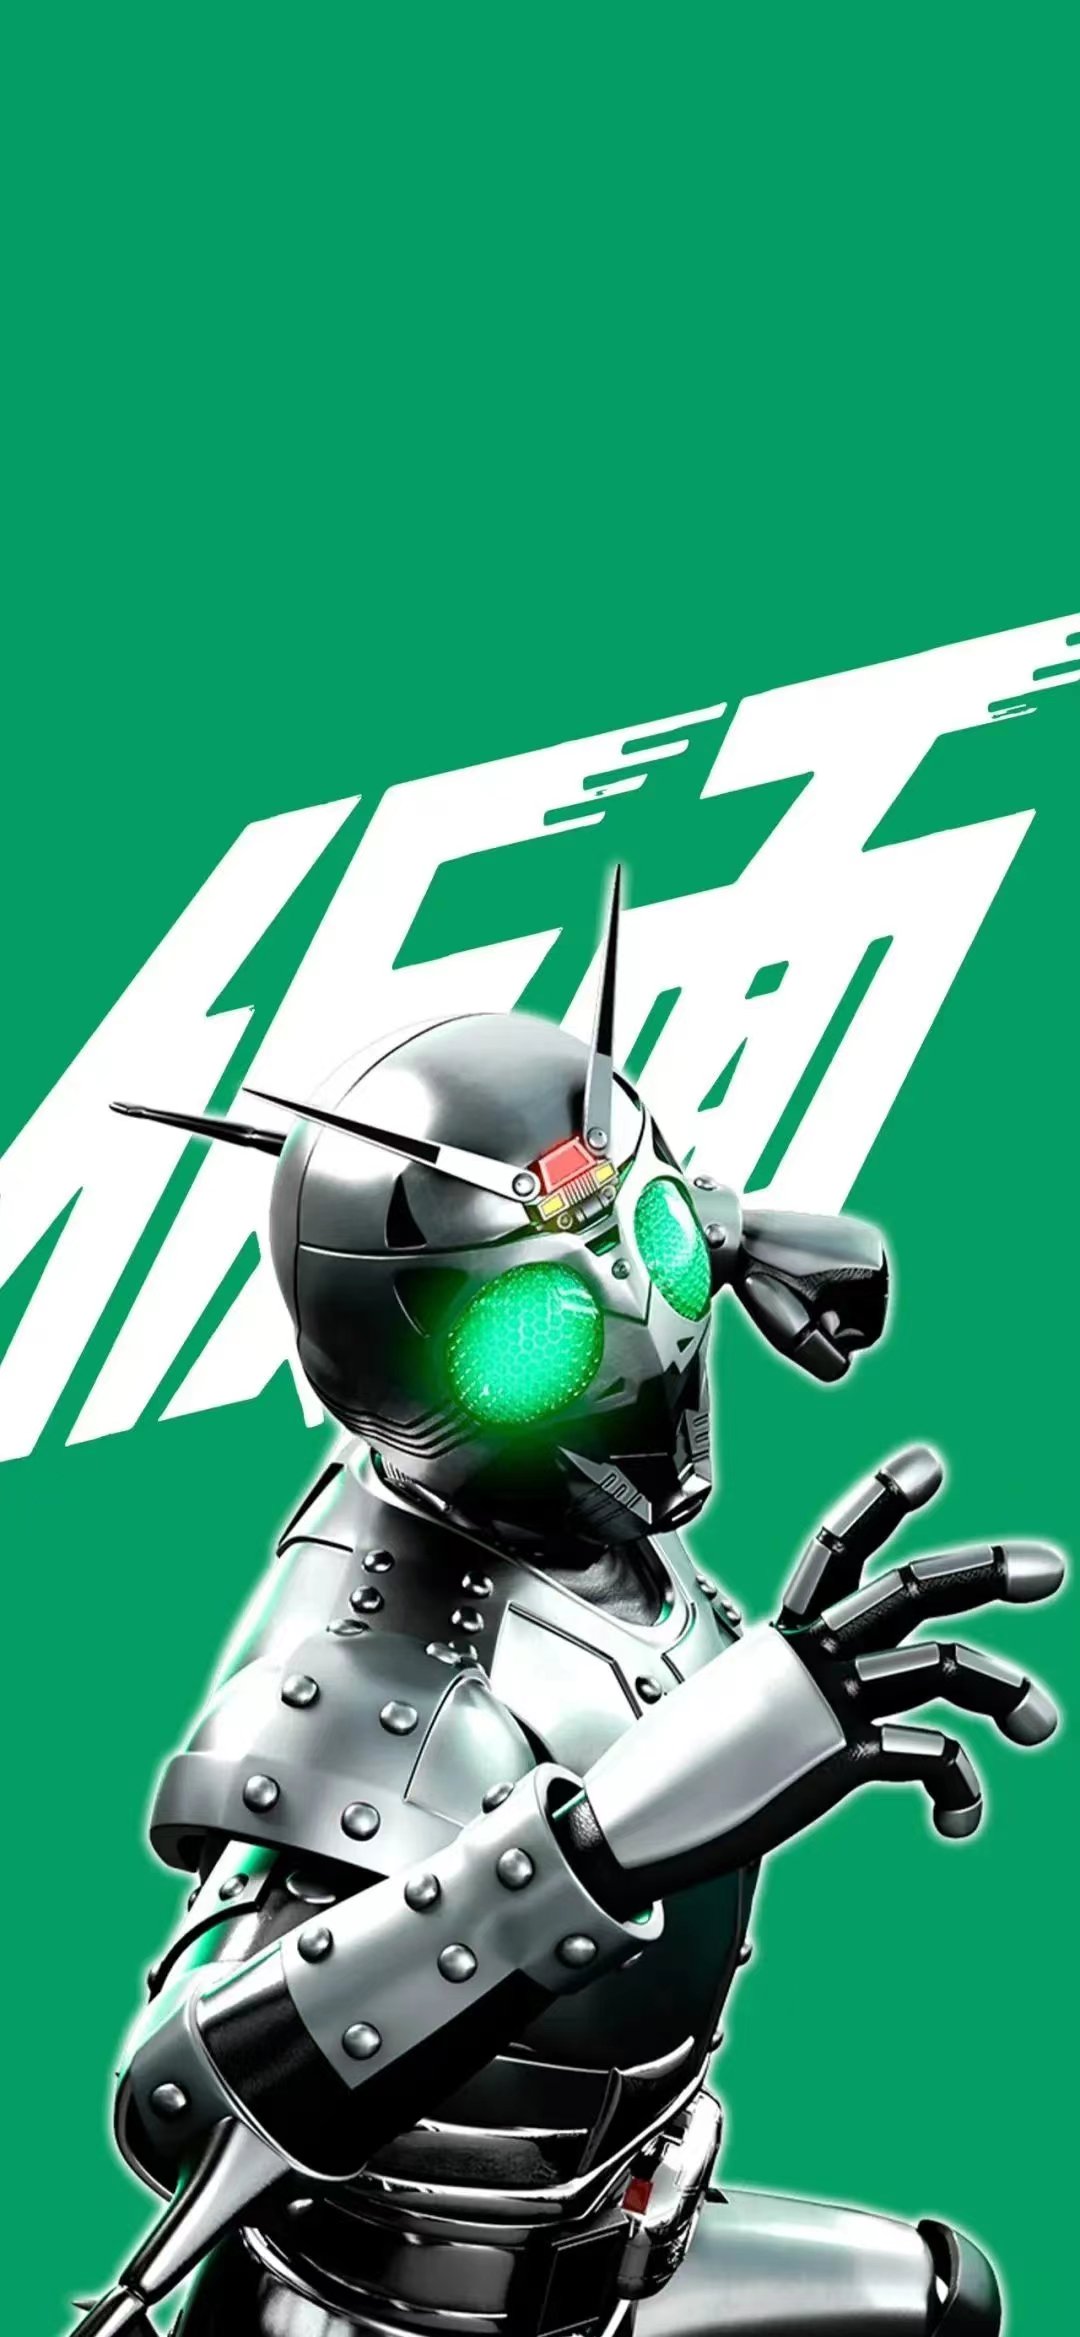 General 1080x2337 Kamen Rider Shadow Moon green background green eyes portrait display superhero minimalism simple background fist